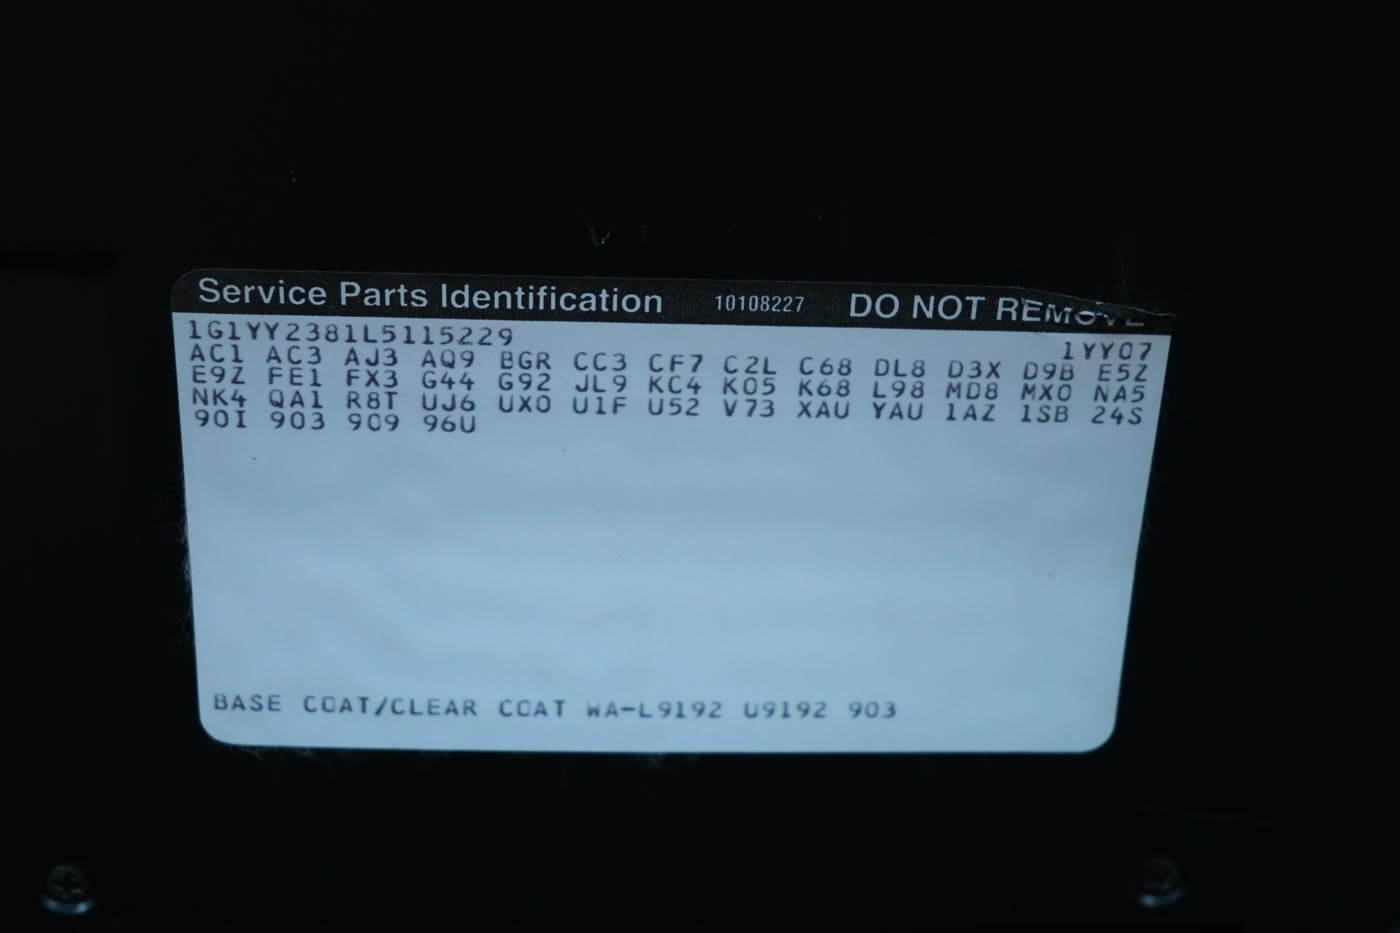 1990 Corvette Build Sticker showing RPO codes.